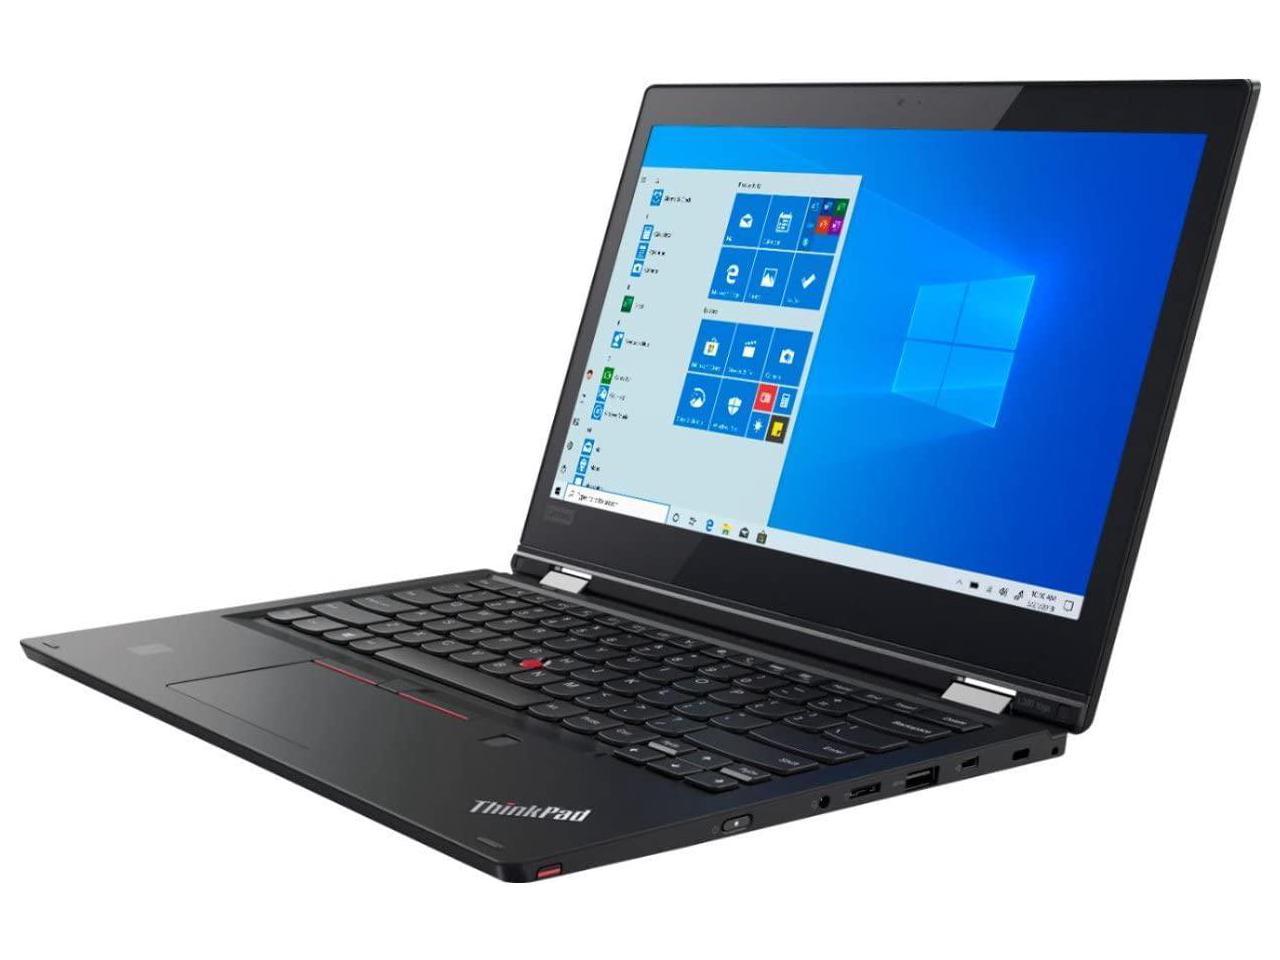 Lenovo ThinkPad L380 Core i5 8th Gen SSD 128GB Touch screen Refurbished